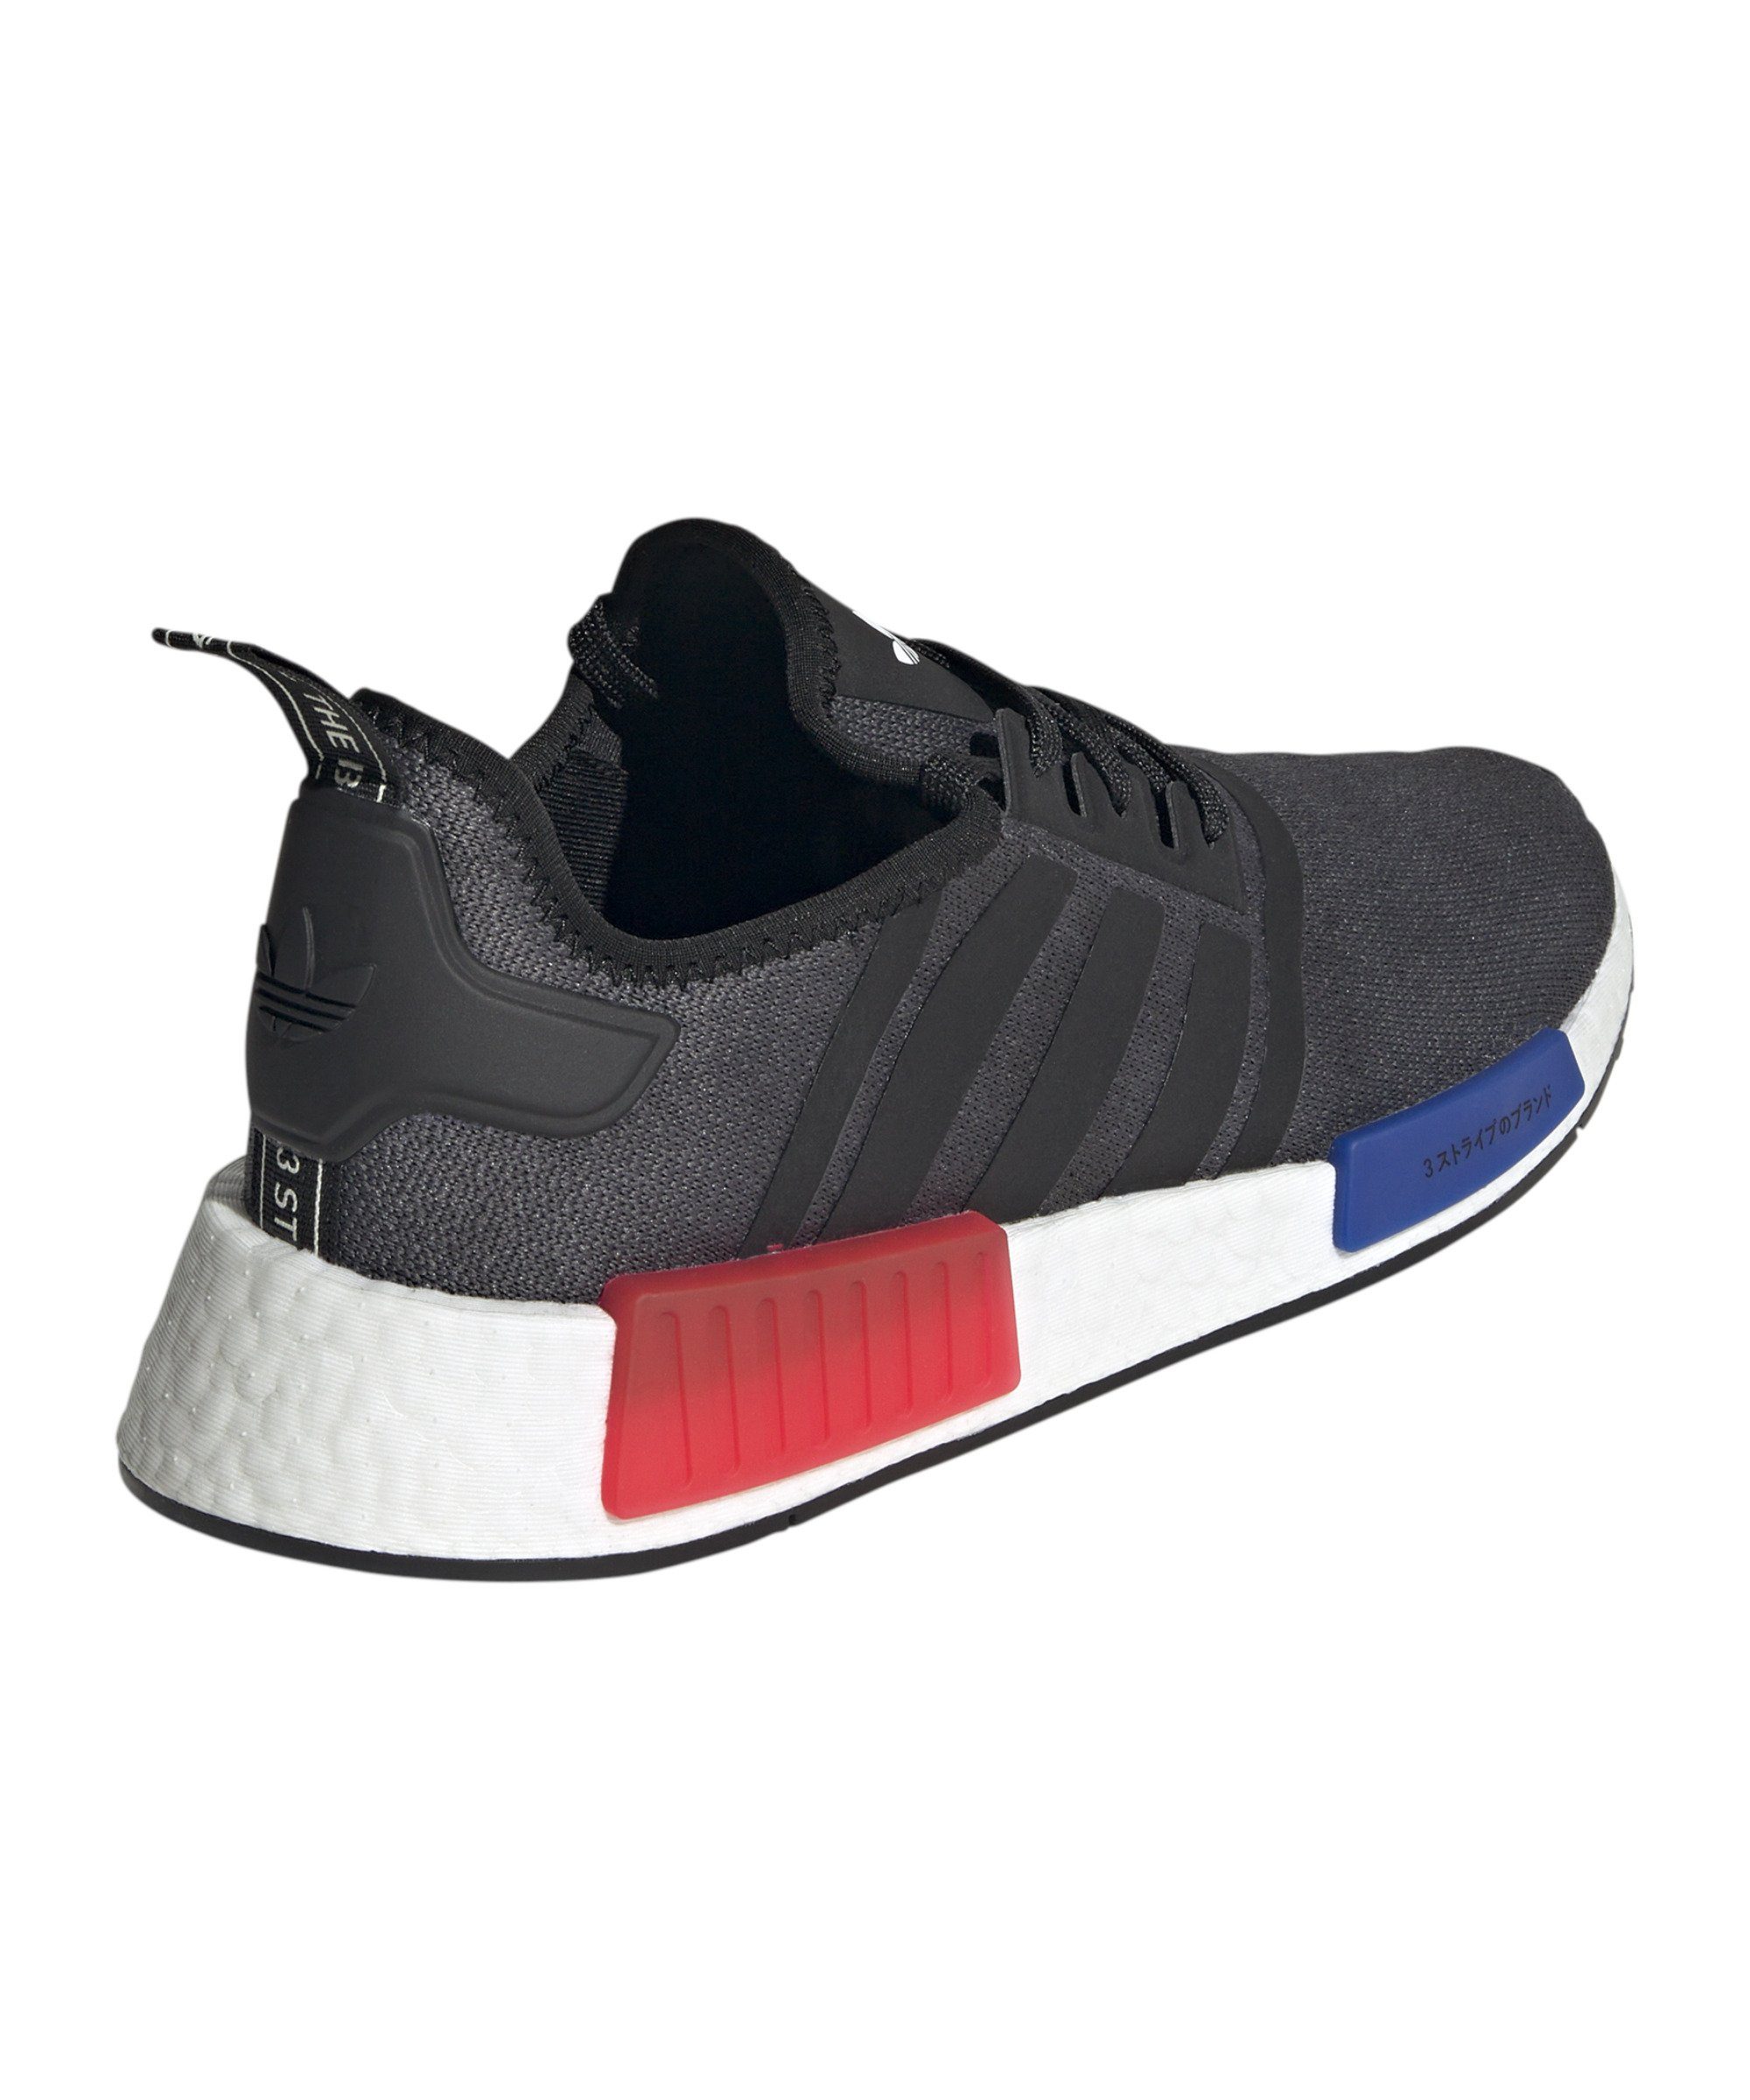 Originals adidas Sneaker NMD_R1 schwarzblaurot